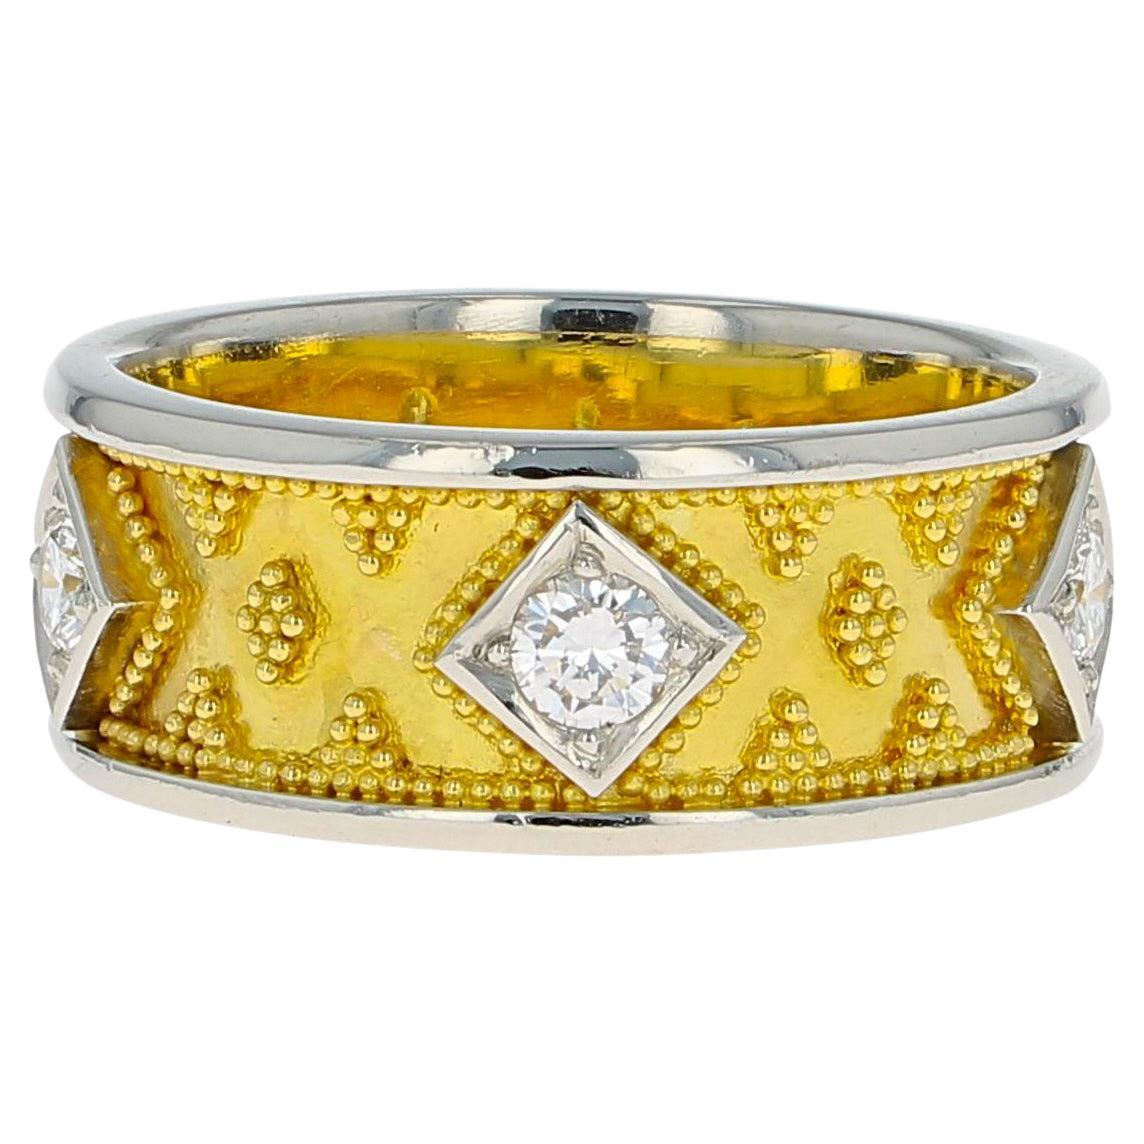 18 Karat Gold and Platinum Band Ring with Diamonds and Granulation